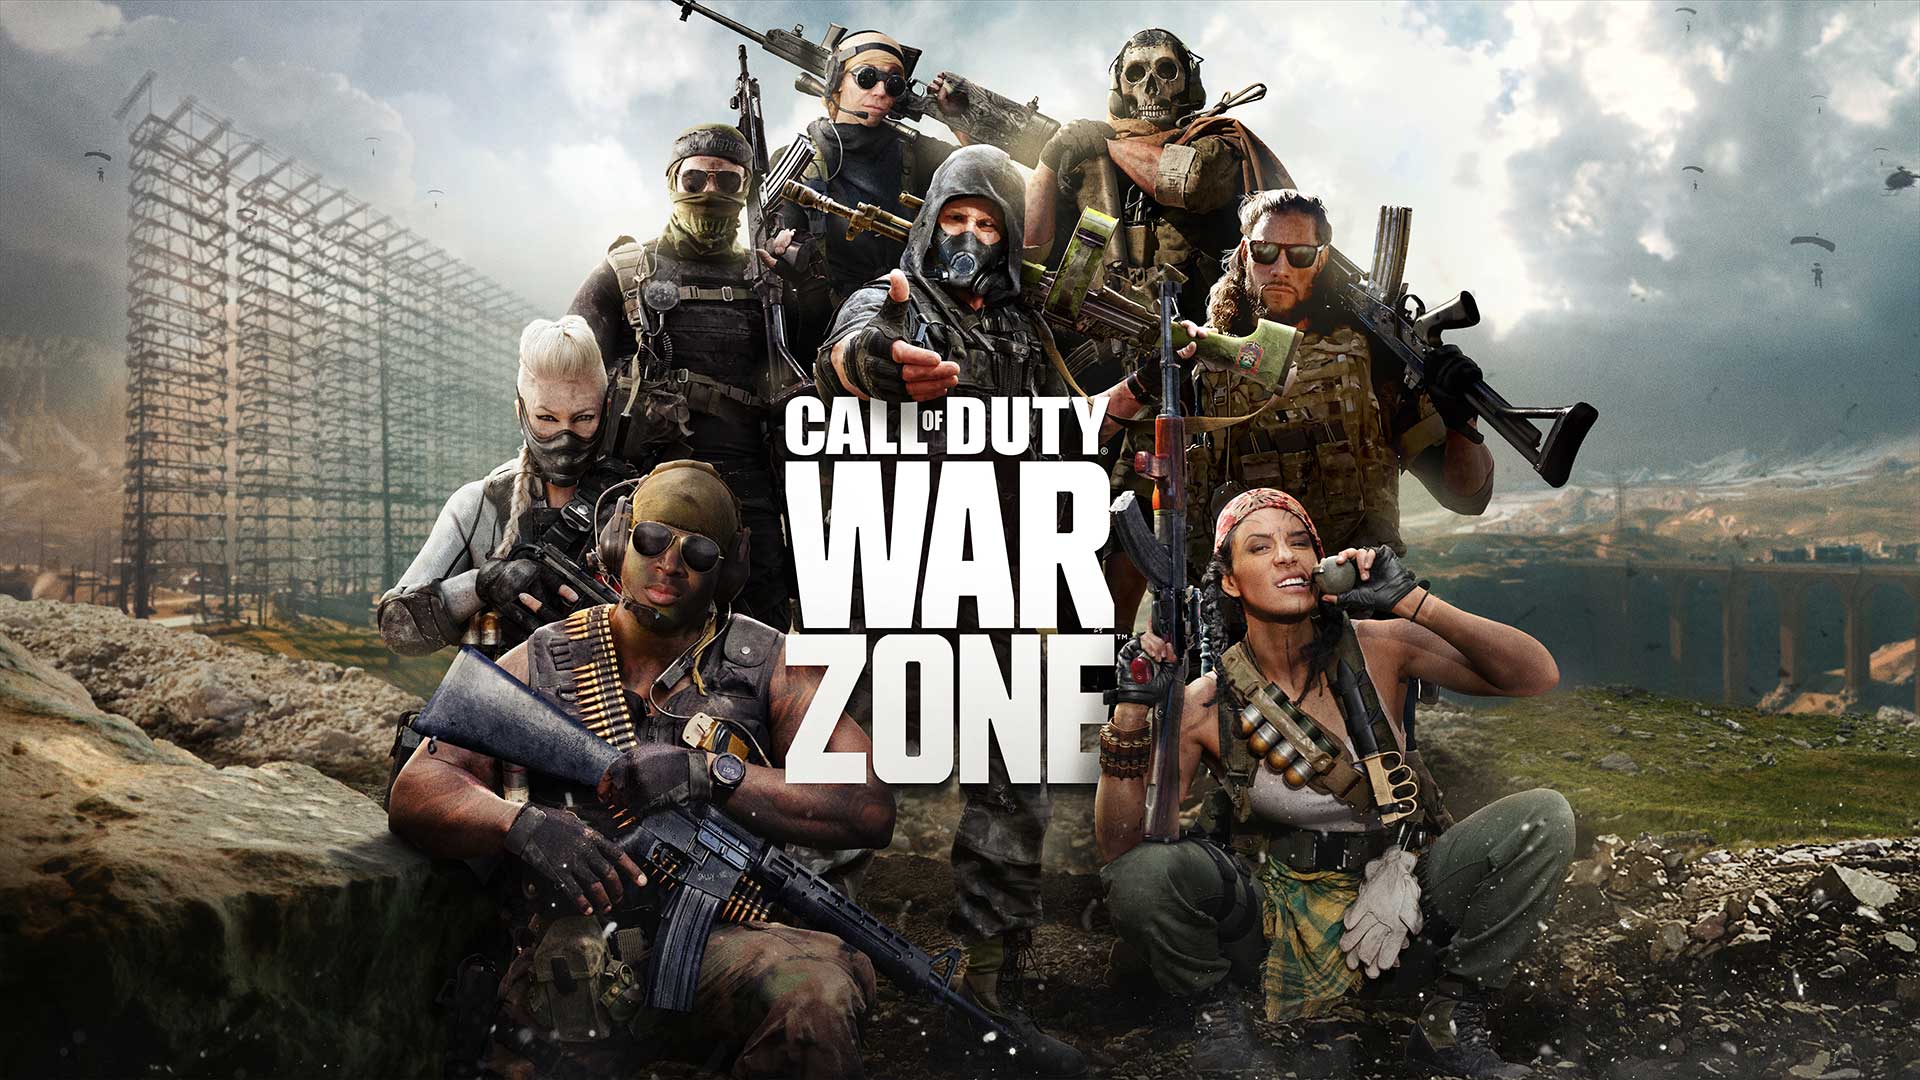 Call of Duty: Warzone 7. Januar Update Nerfs Akimbo Double Barrel!